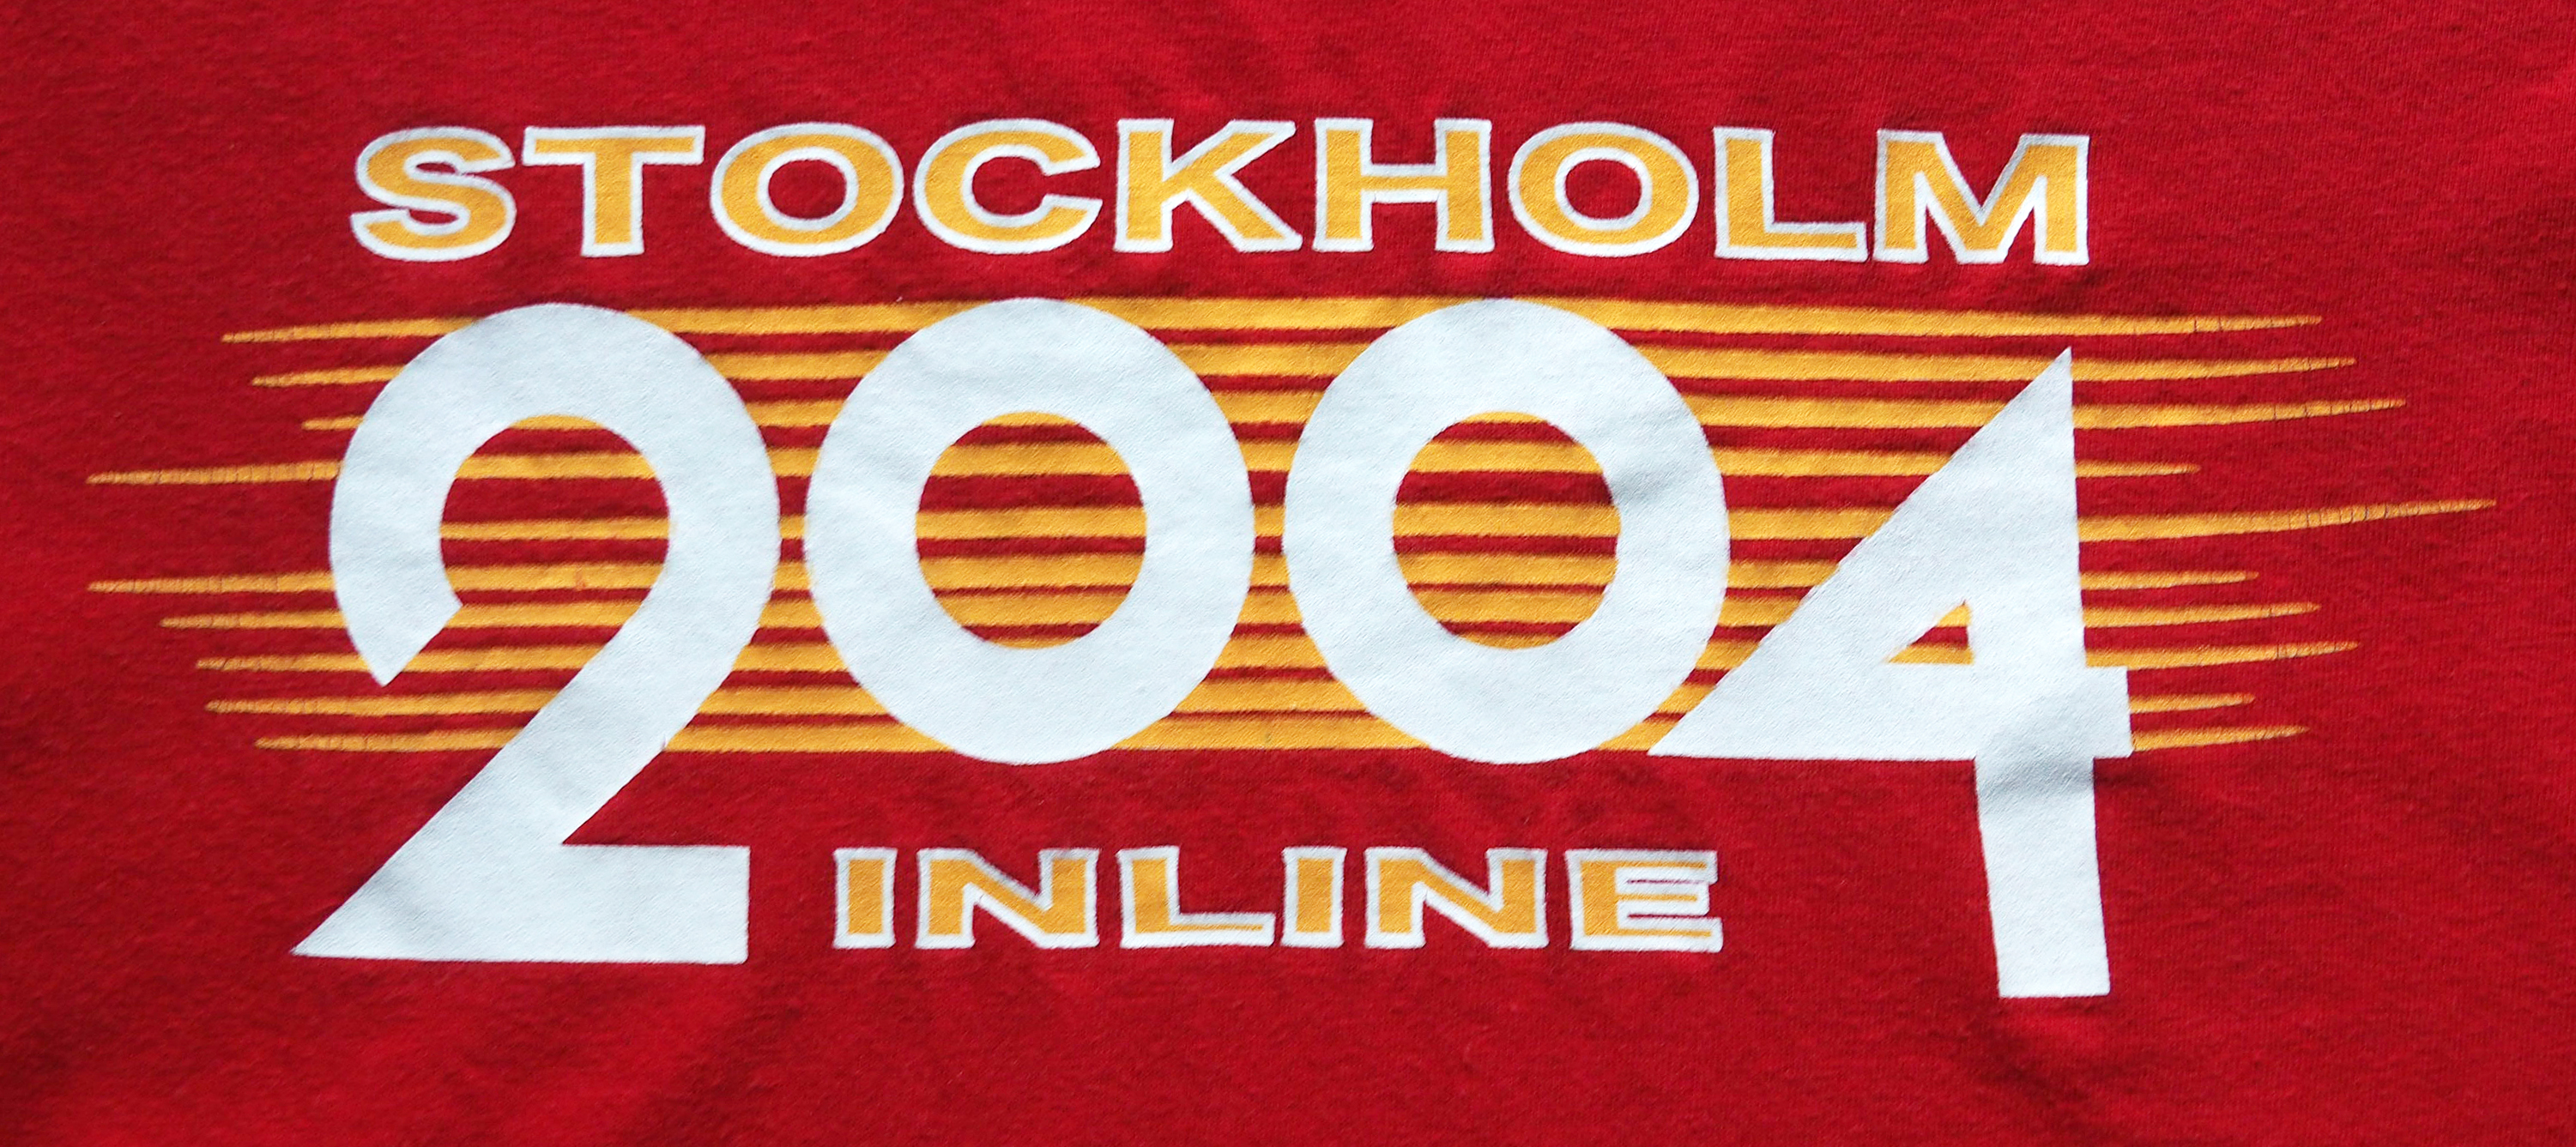 Stockholm Inline 2004 logotype